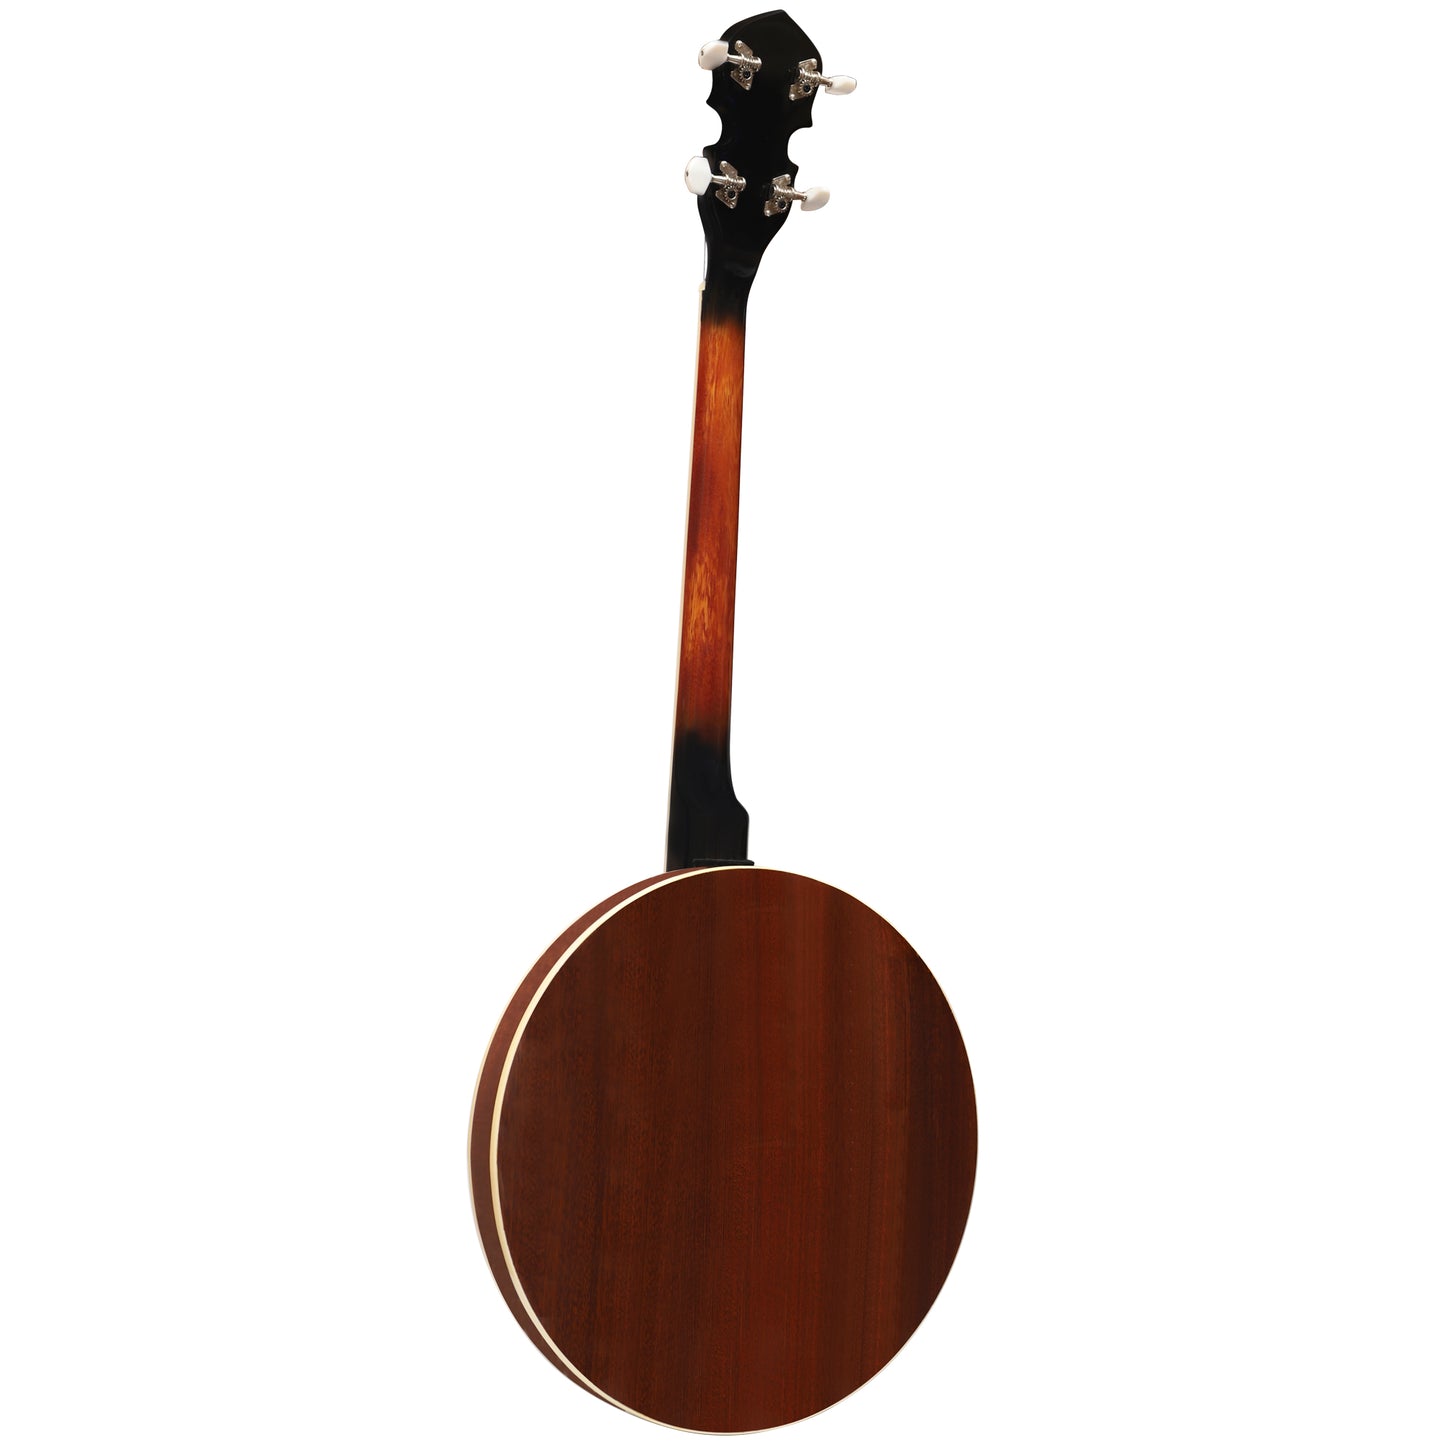 Heartland 4 String 17 Fret Irish Tenor Banjo Left Handed Player Series with Closed Solid Back Sunburst Finish